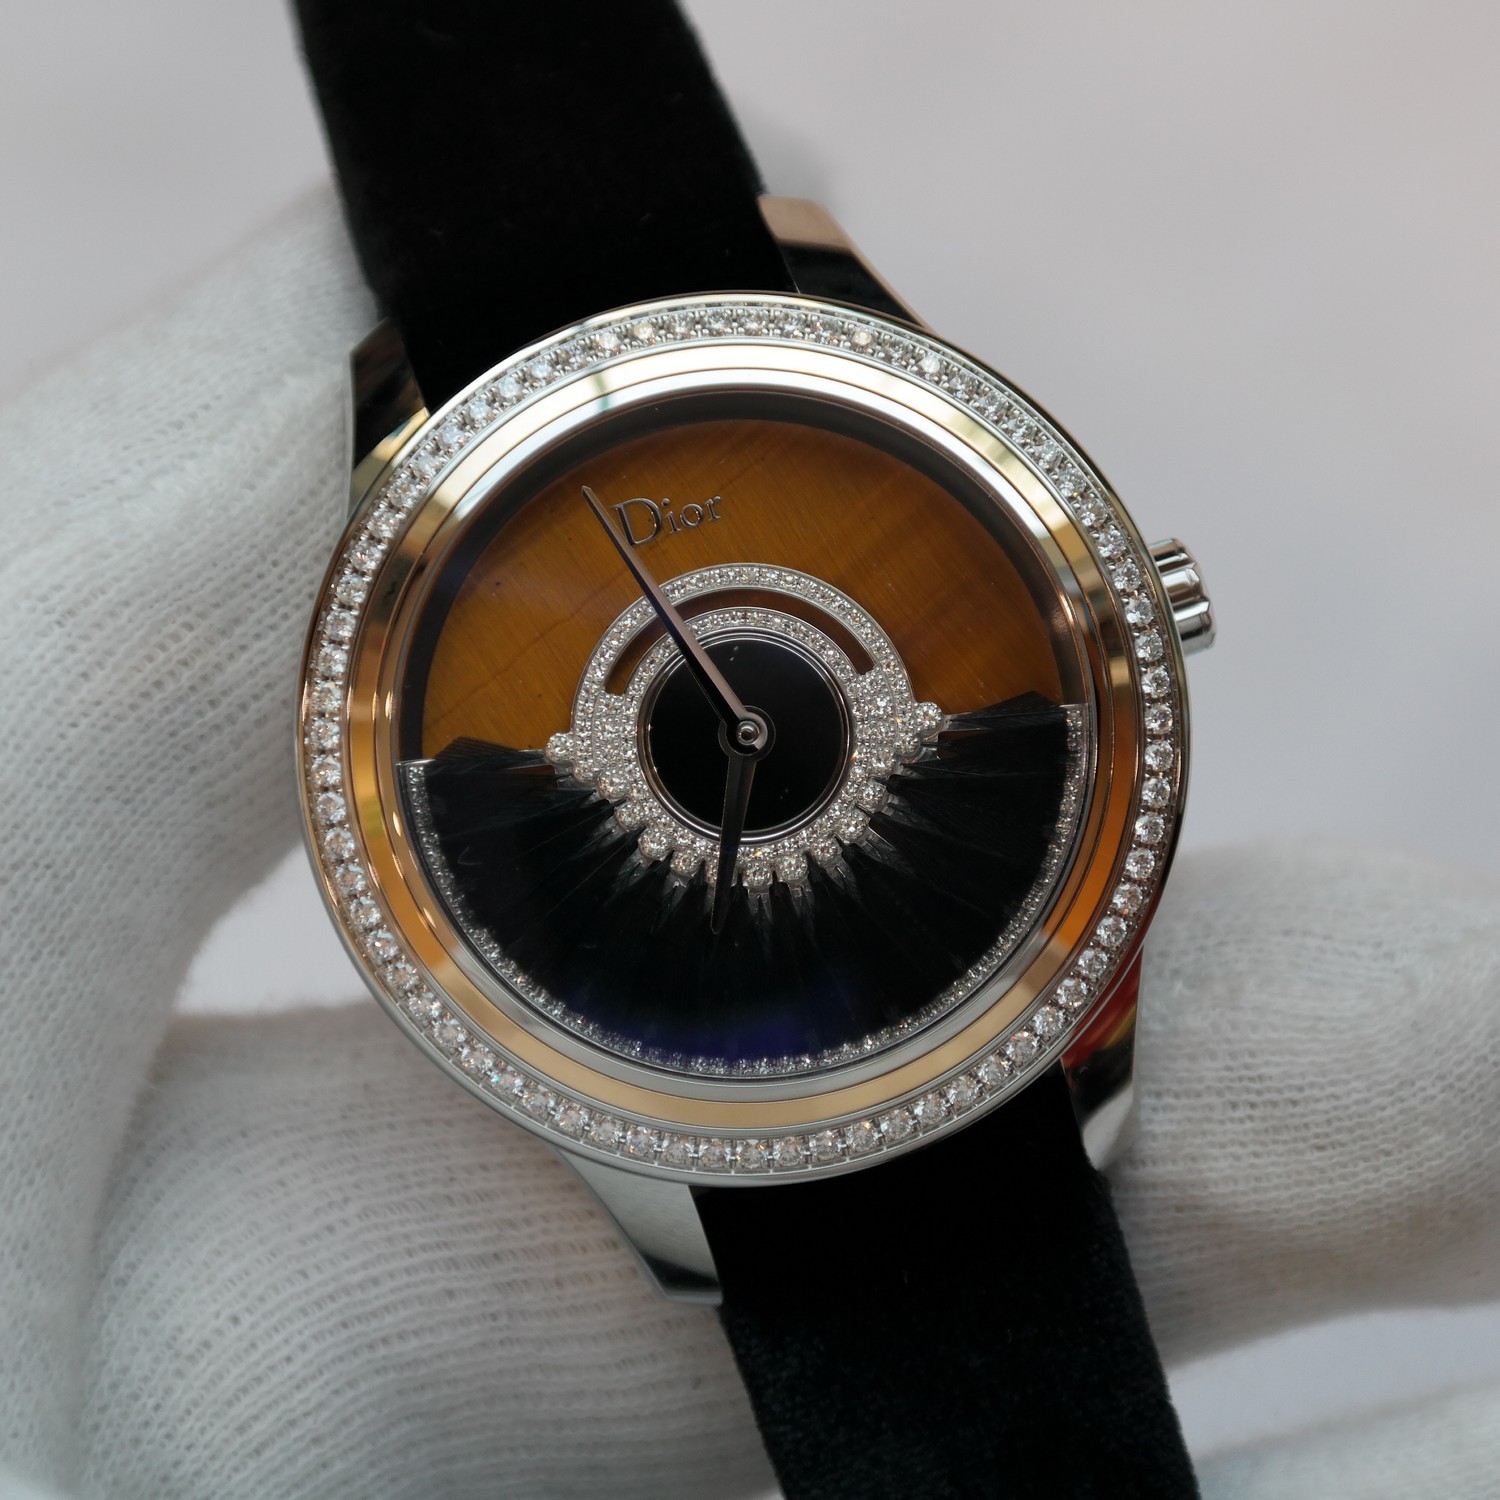 Dior Grand Bal Plume 36 mm watch. Reference dial: CD153B2SA001